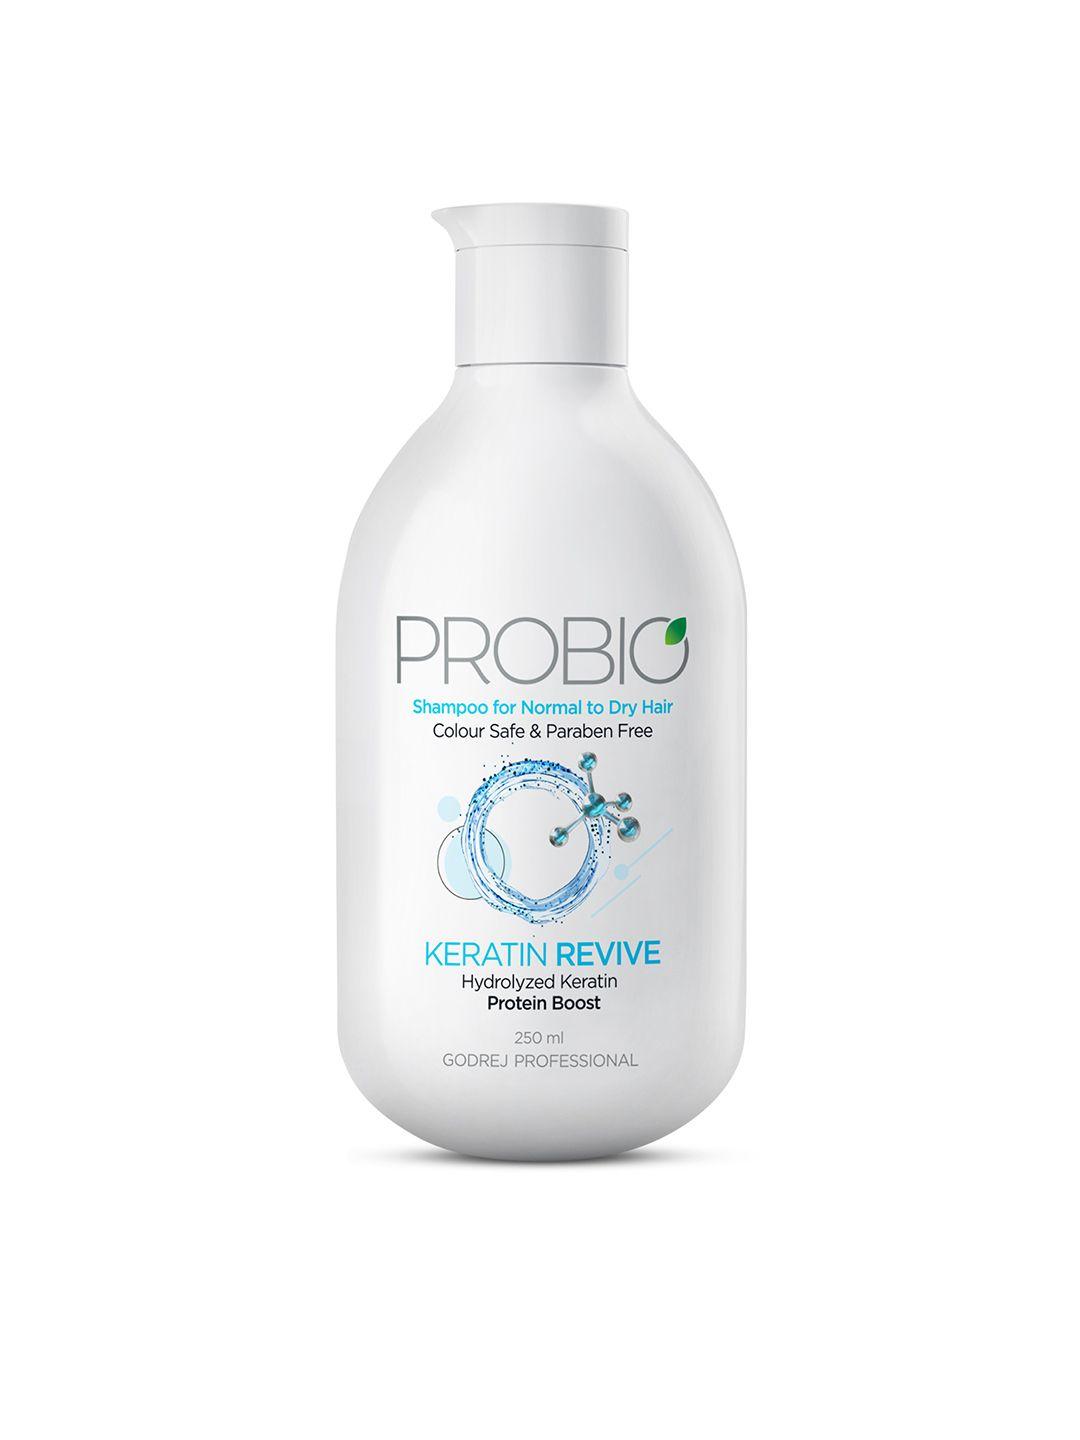 godrej professional probio keratin revive shampoo for protein boost - 250 ml